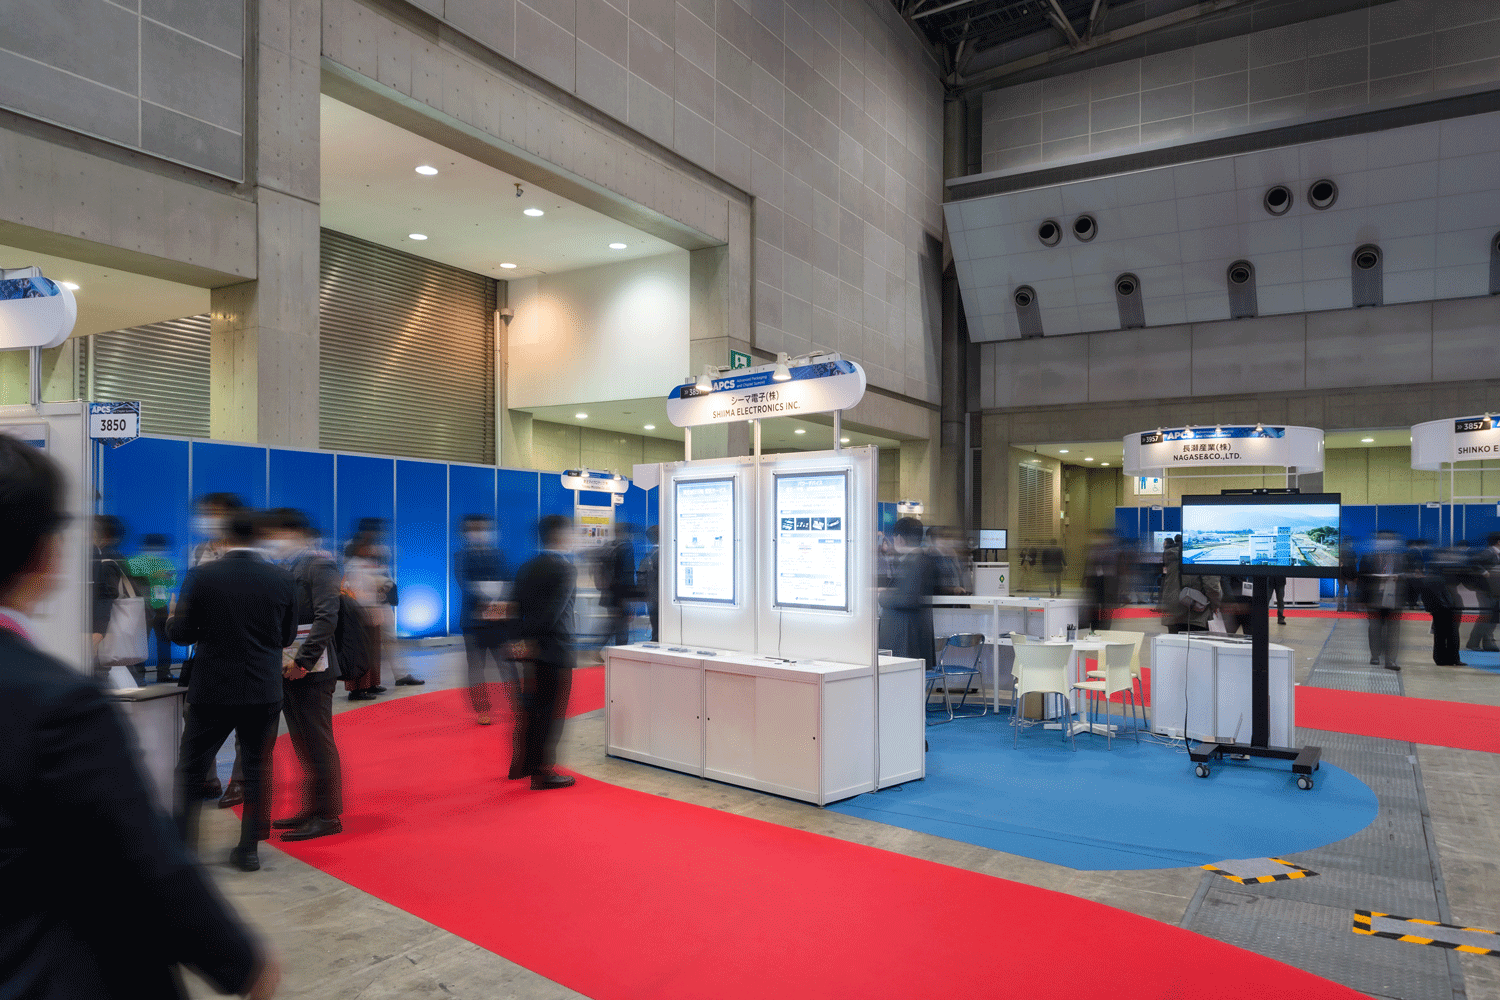 SEMICON JAPAN 2022 シーマ電子の展示ブース